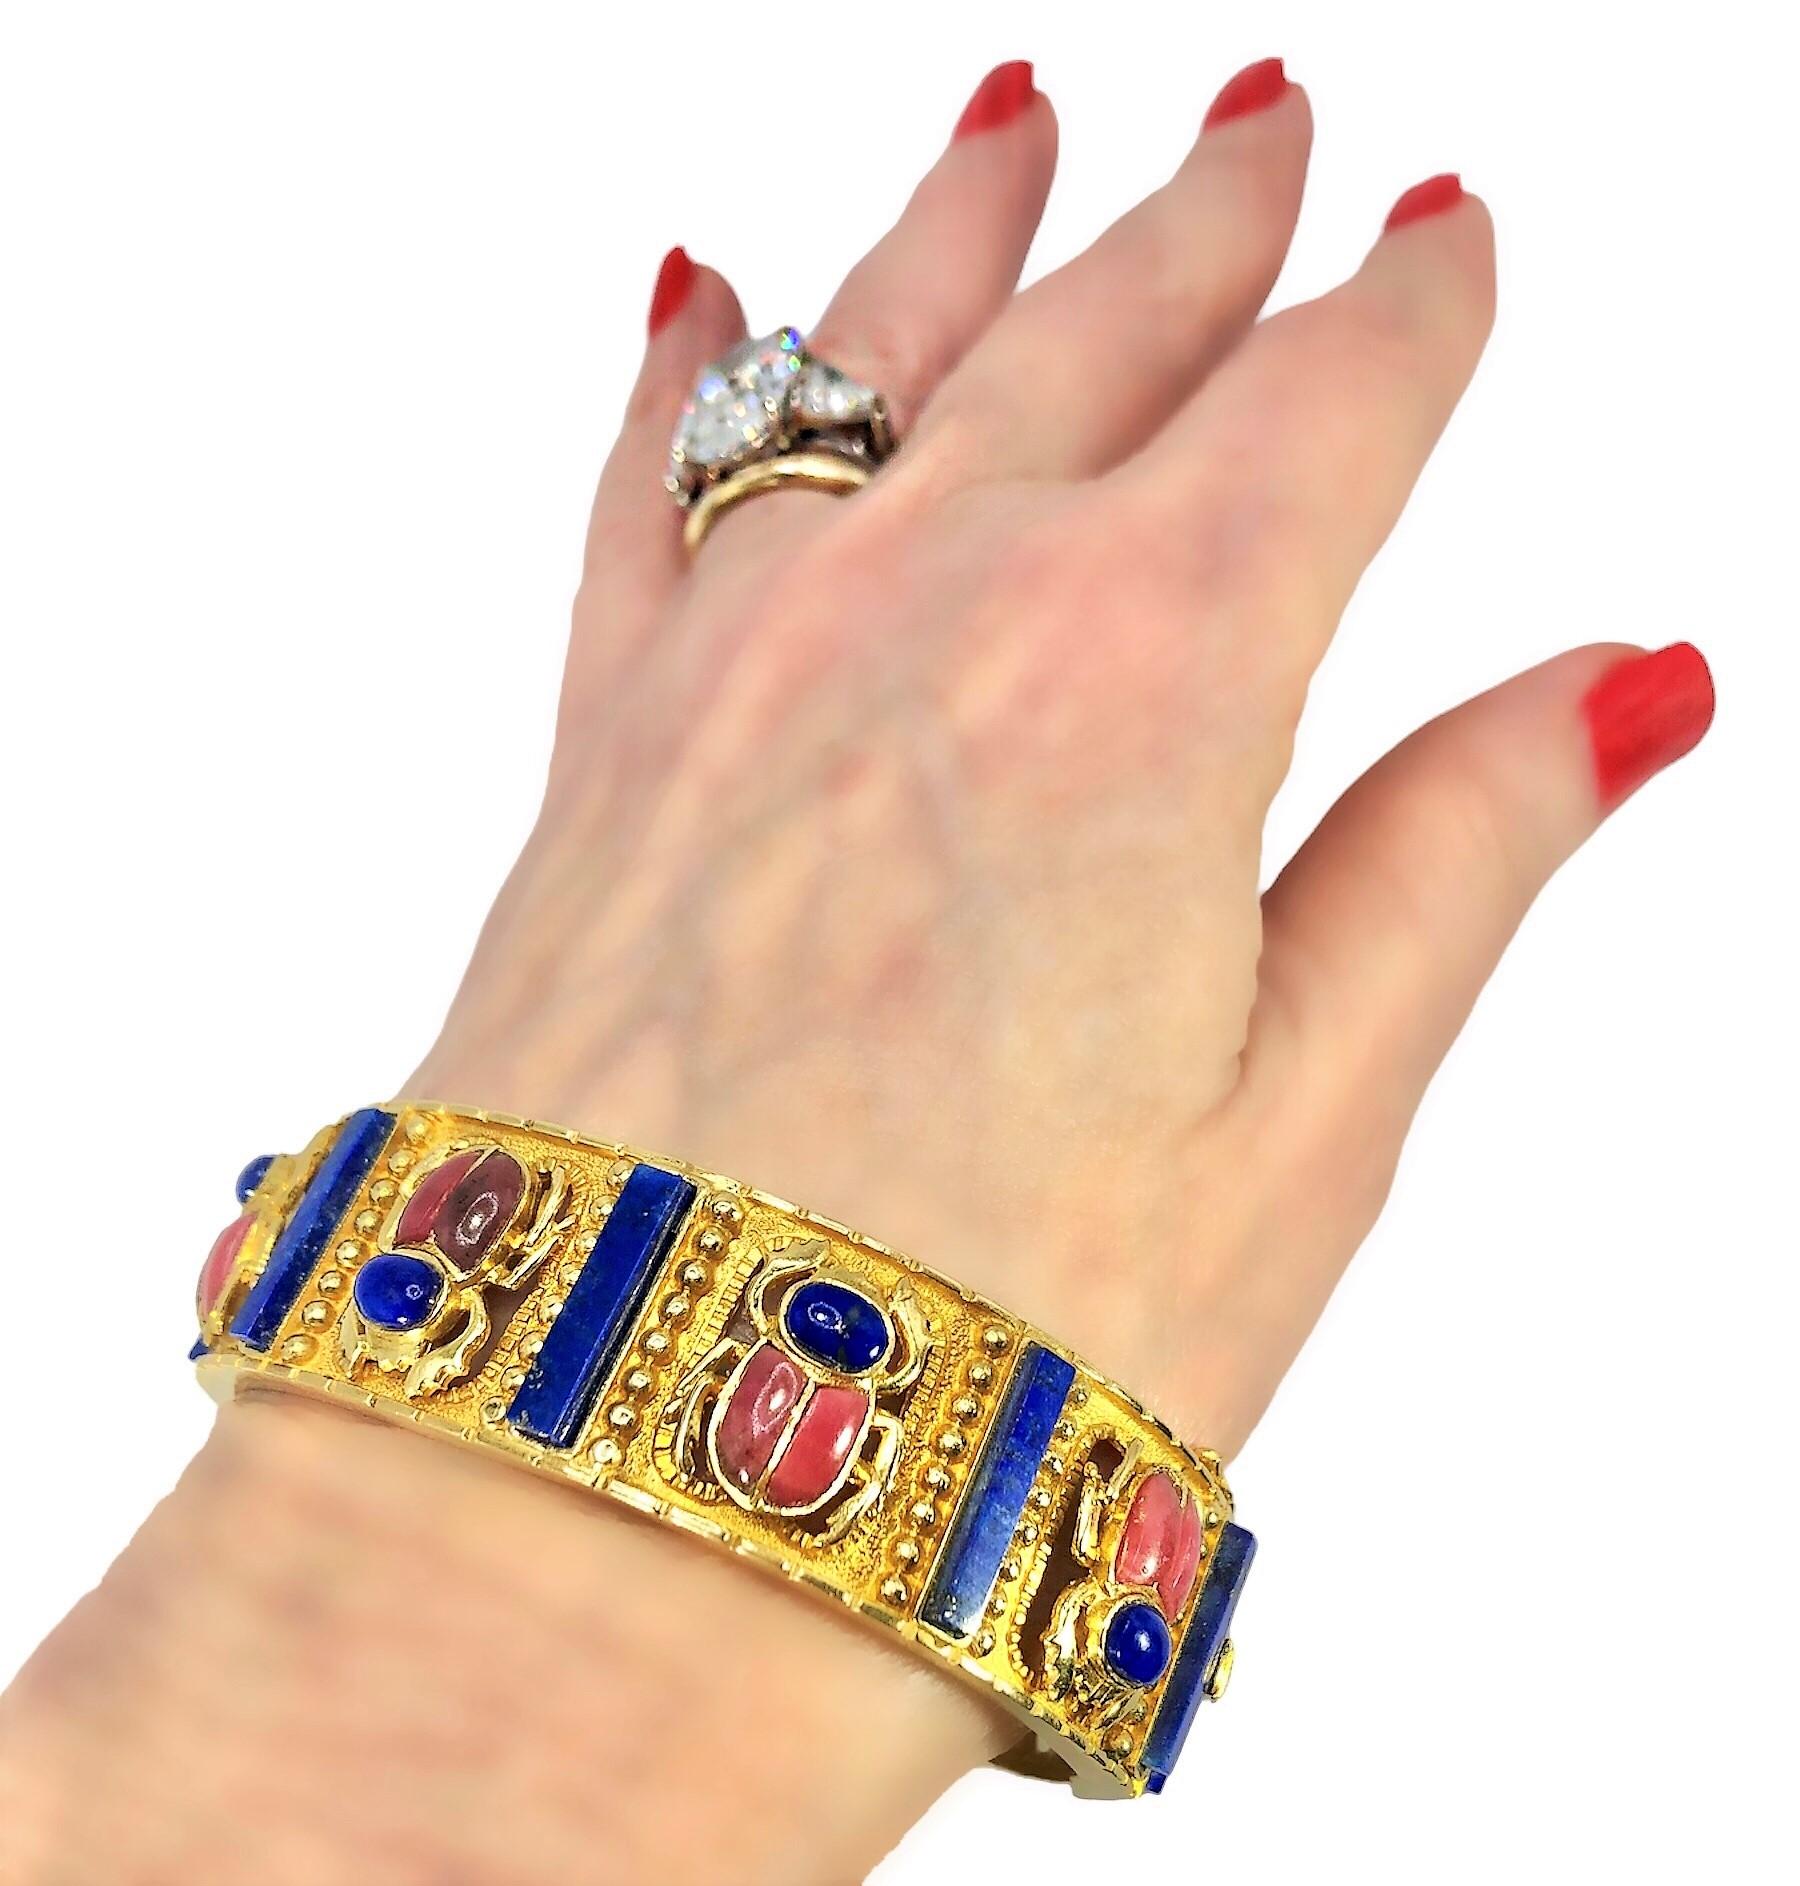 Proantic The Egyptian Revival Style Bracelet In Gold